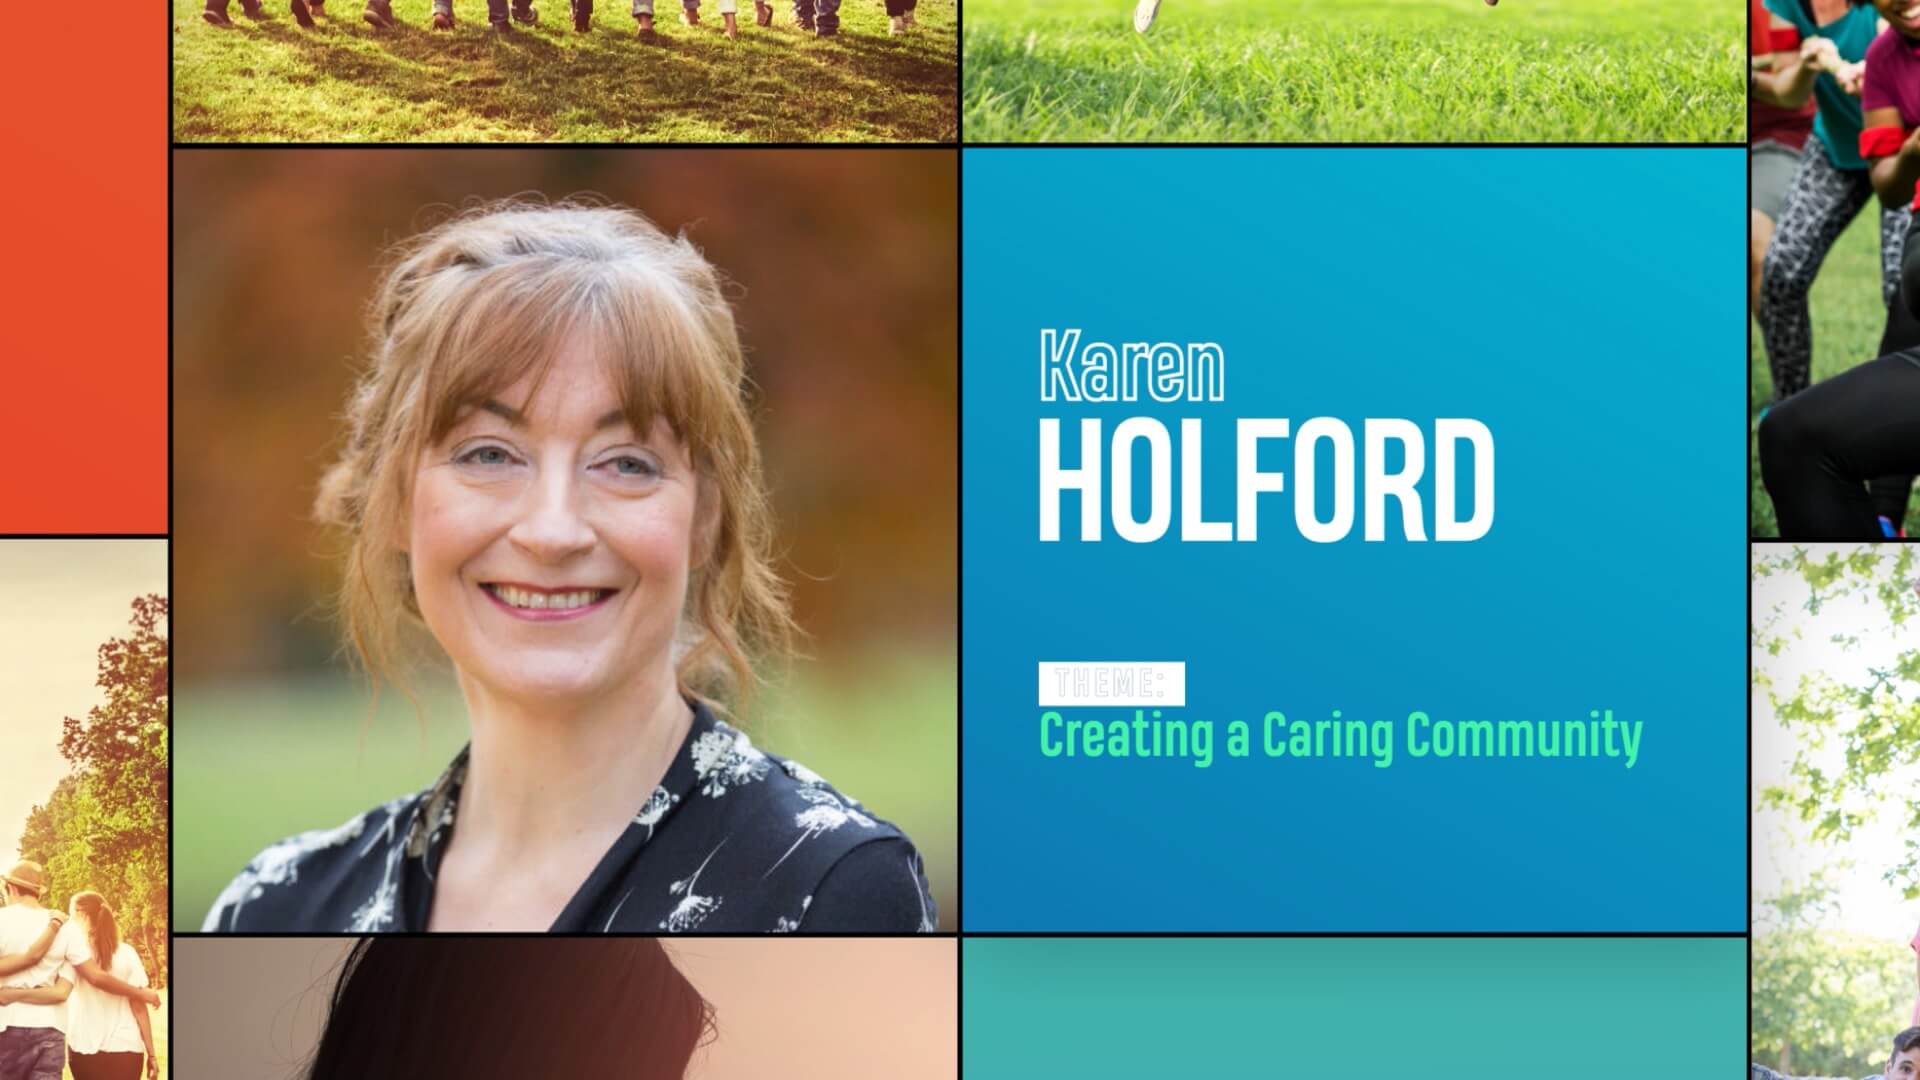 k.holford creating caring community